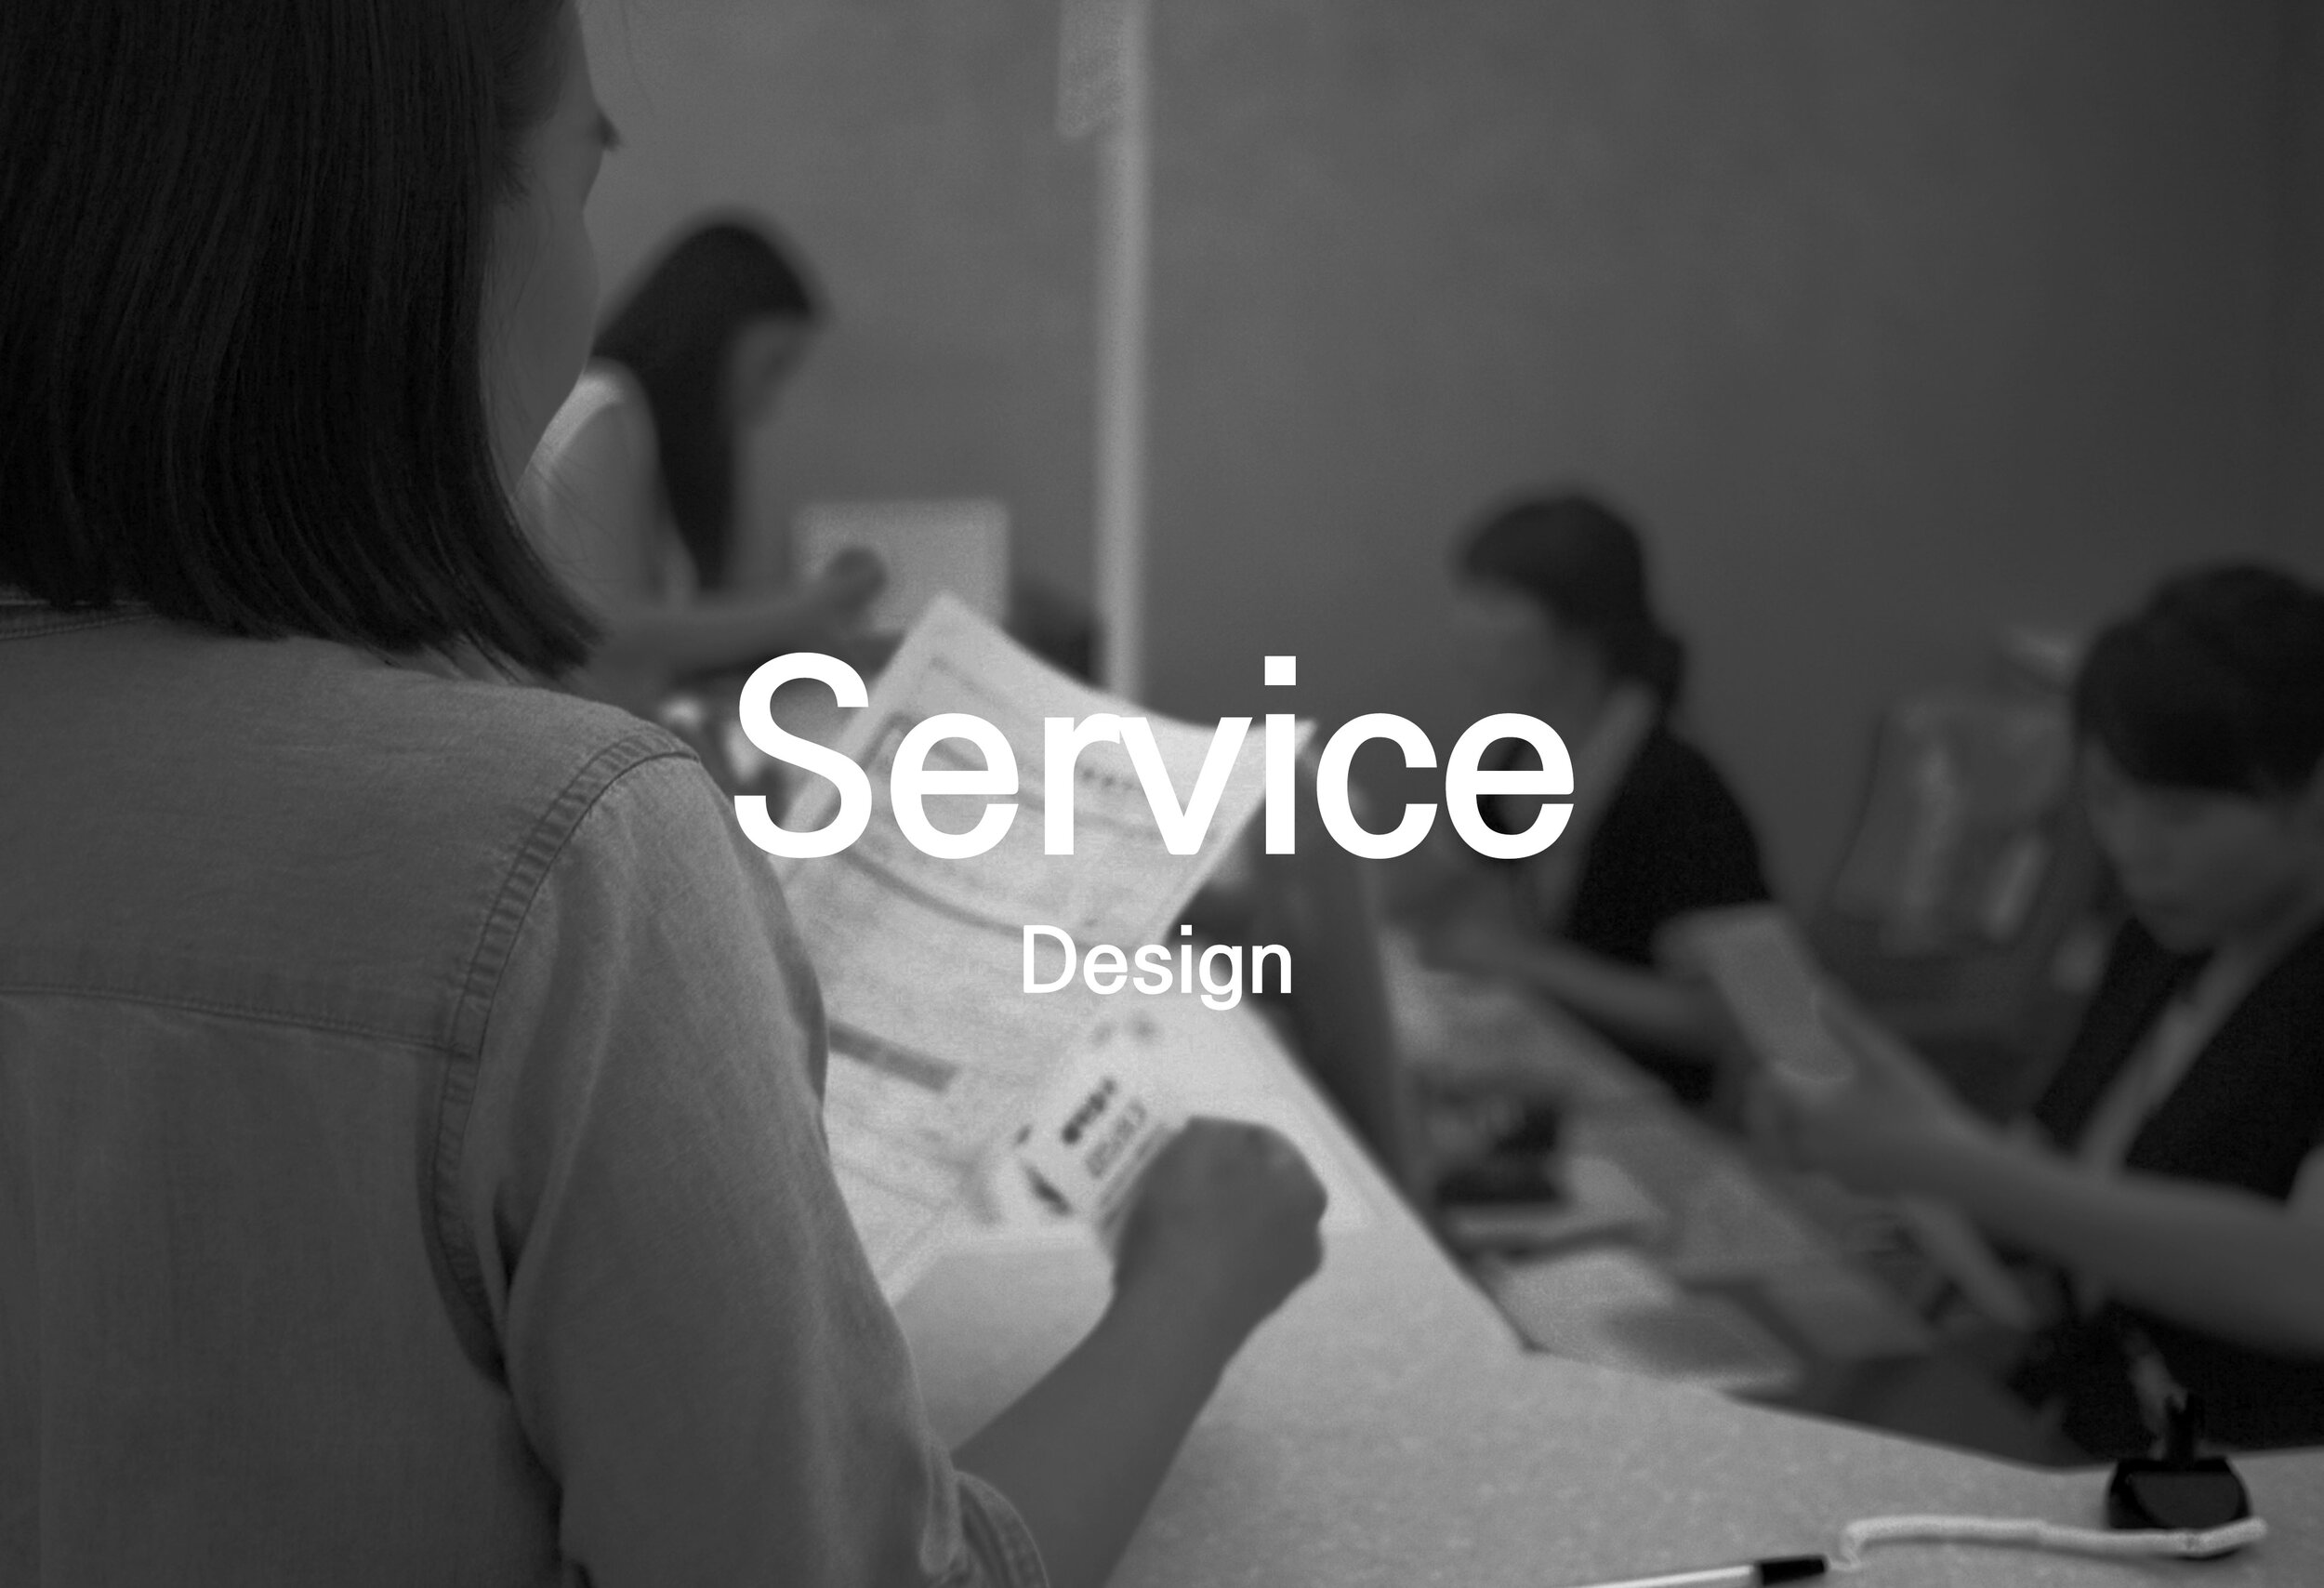 service.jpg